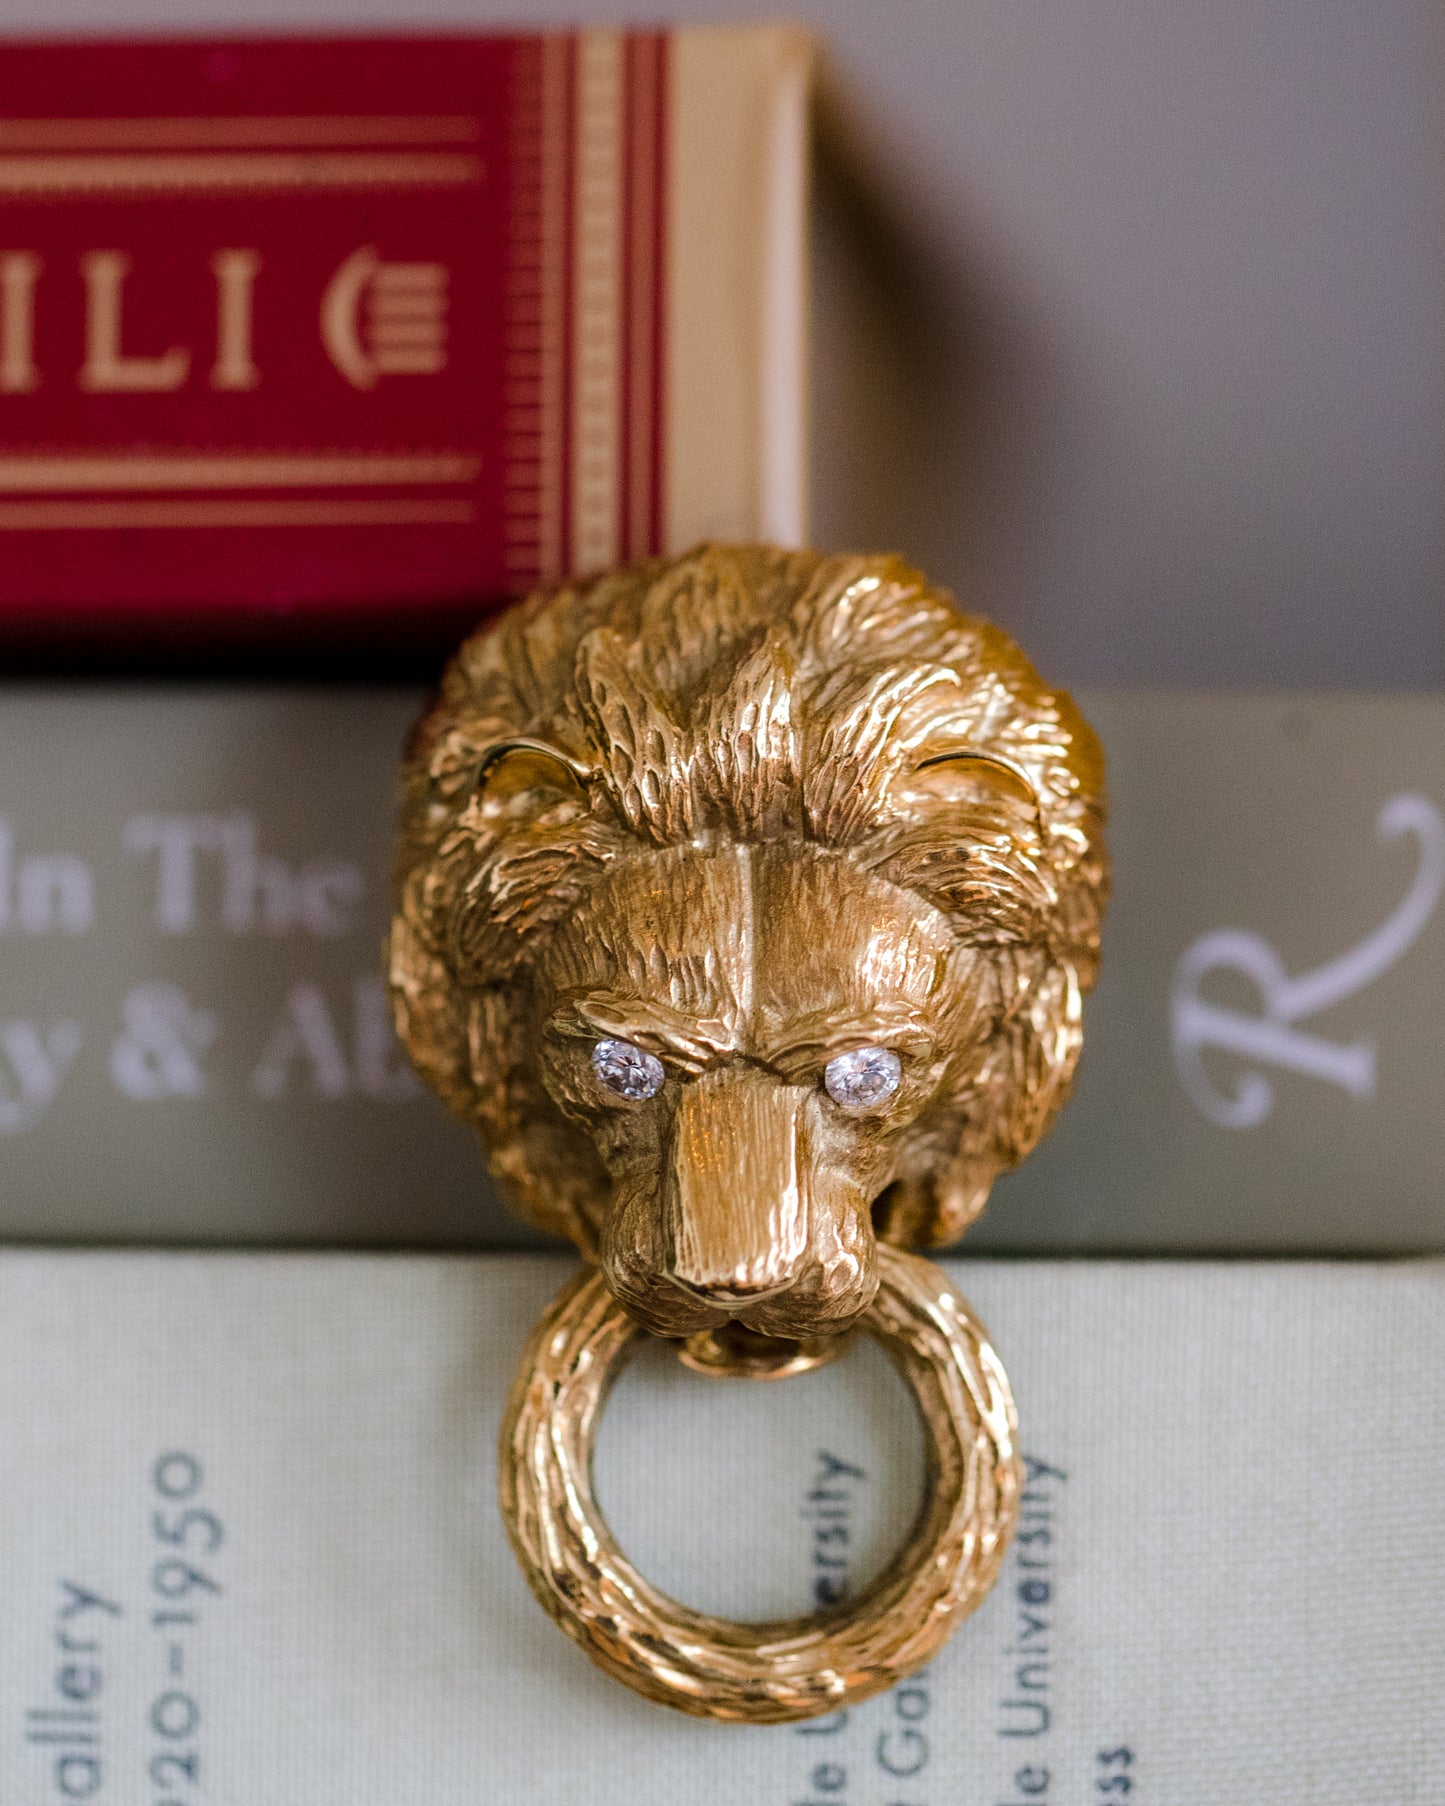 1960s Van Cleef & Arpels 18k Gold Lion Brooch